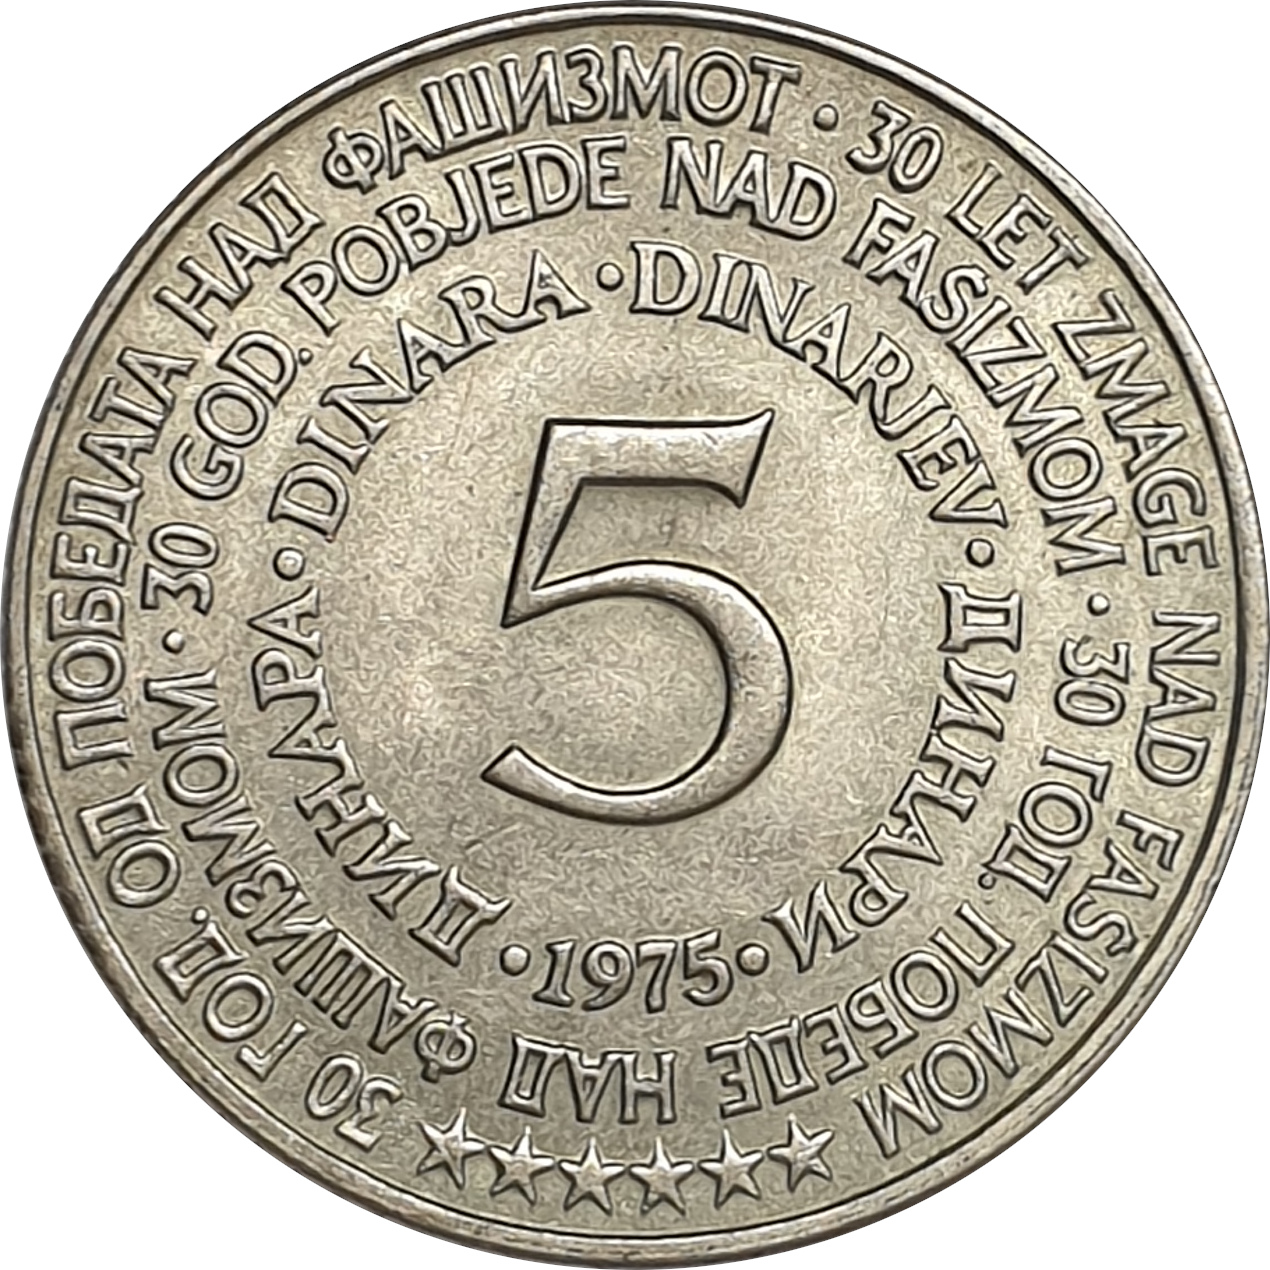 5 dinara - Emblem - Victory over Nazism